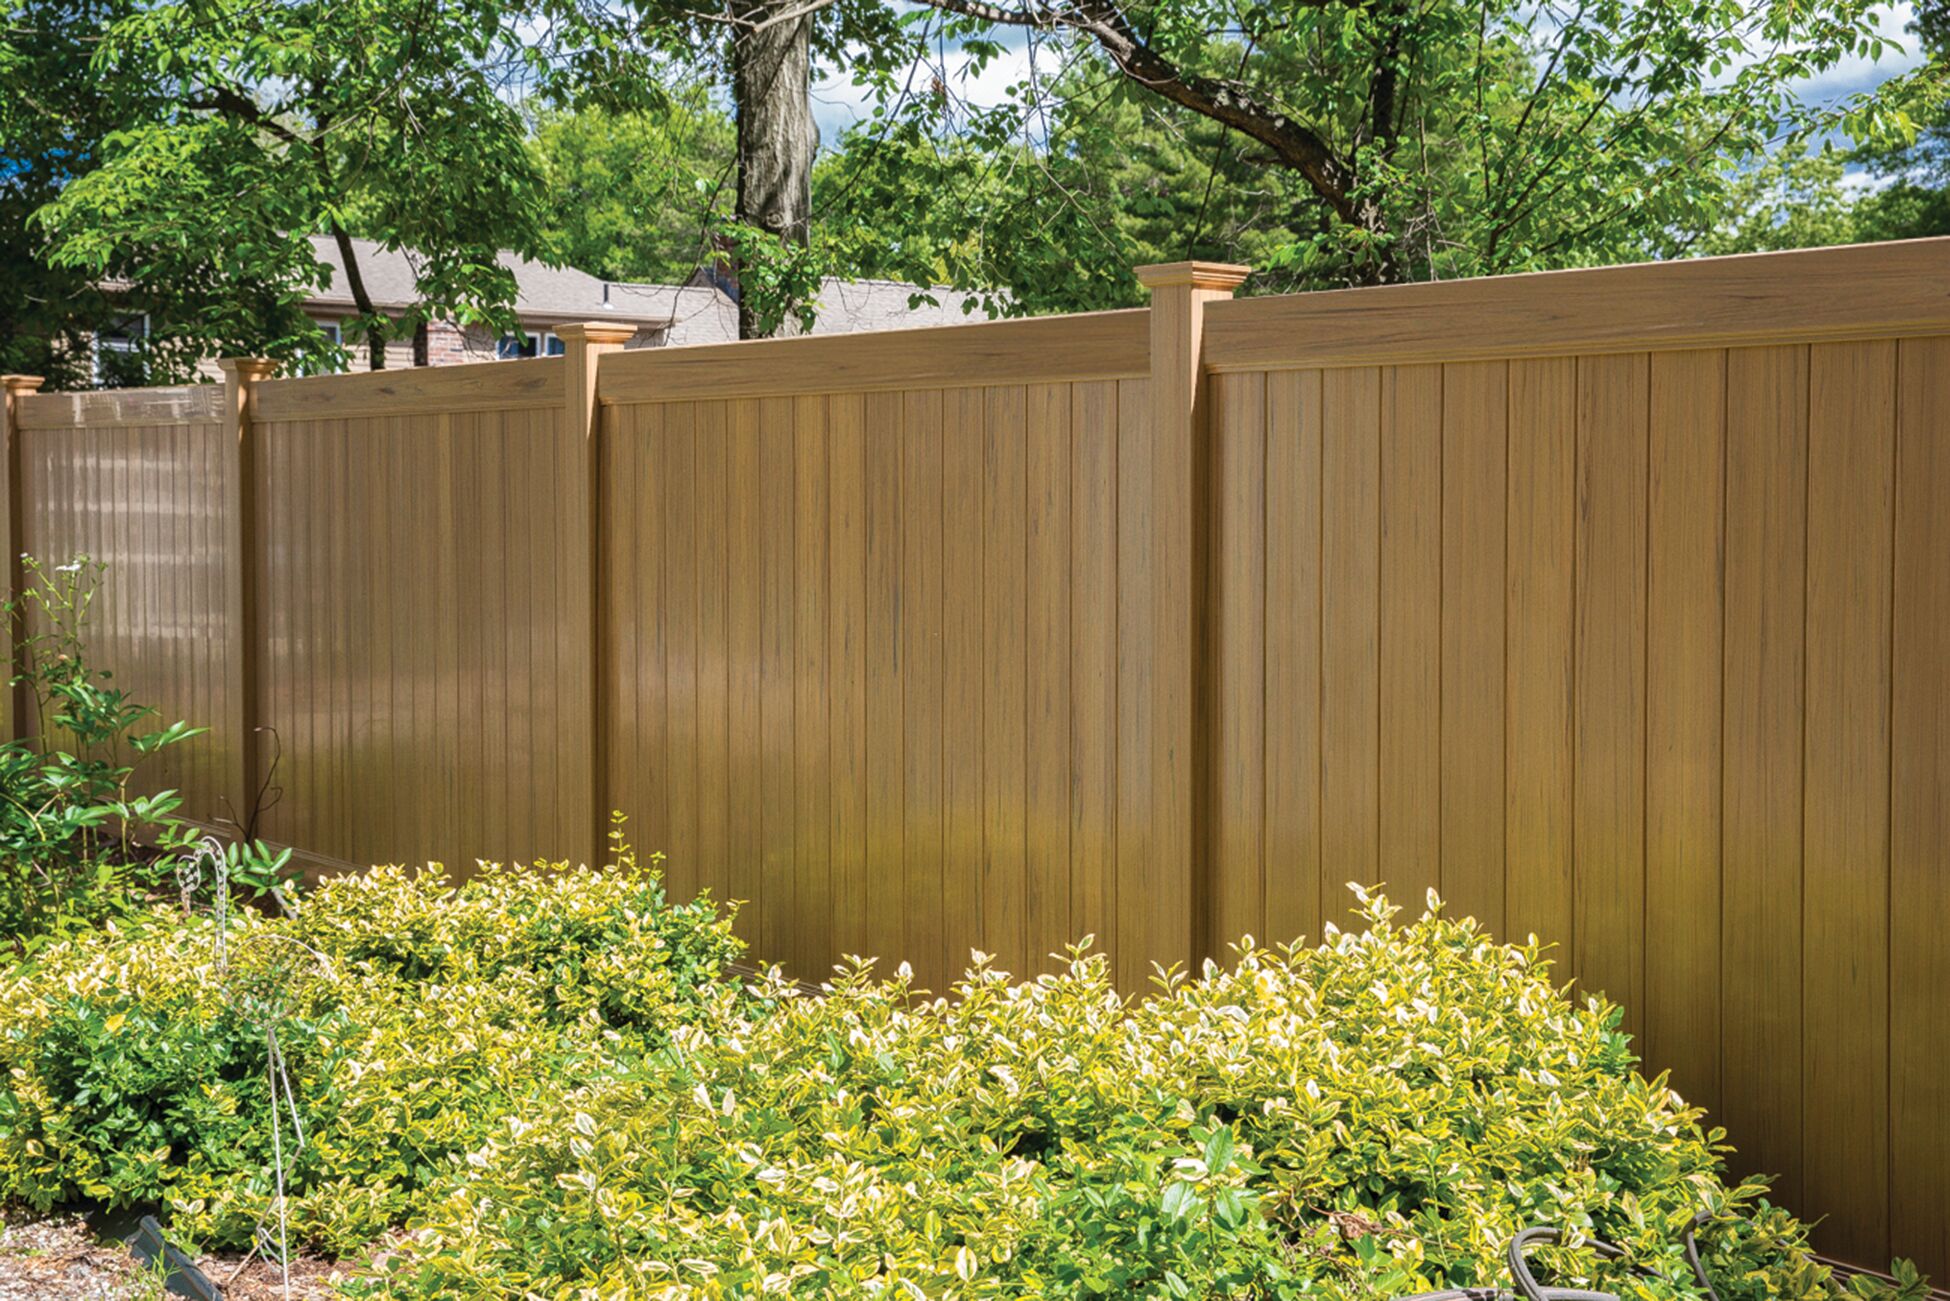 Dogwood vinyl fence in cypress color enclosing a backyard